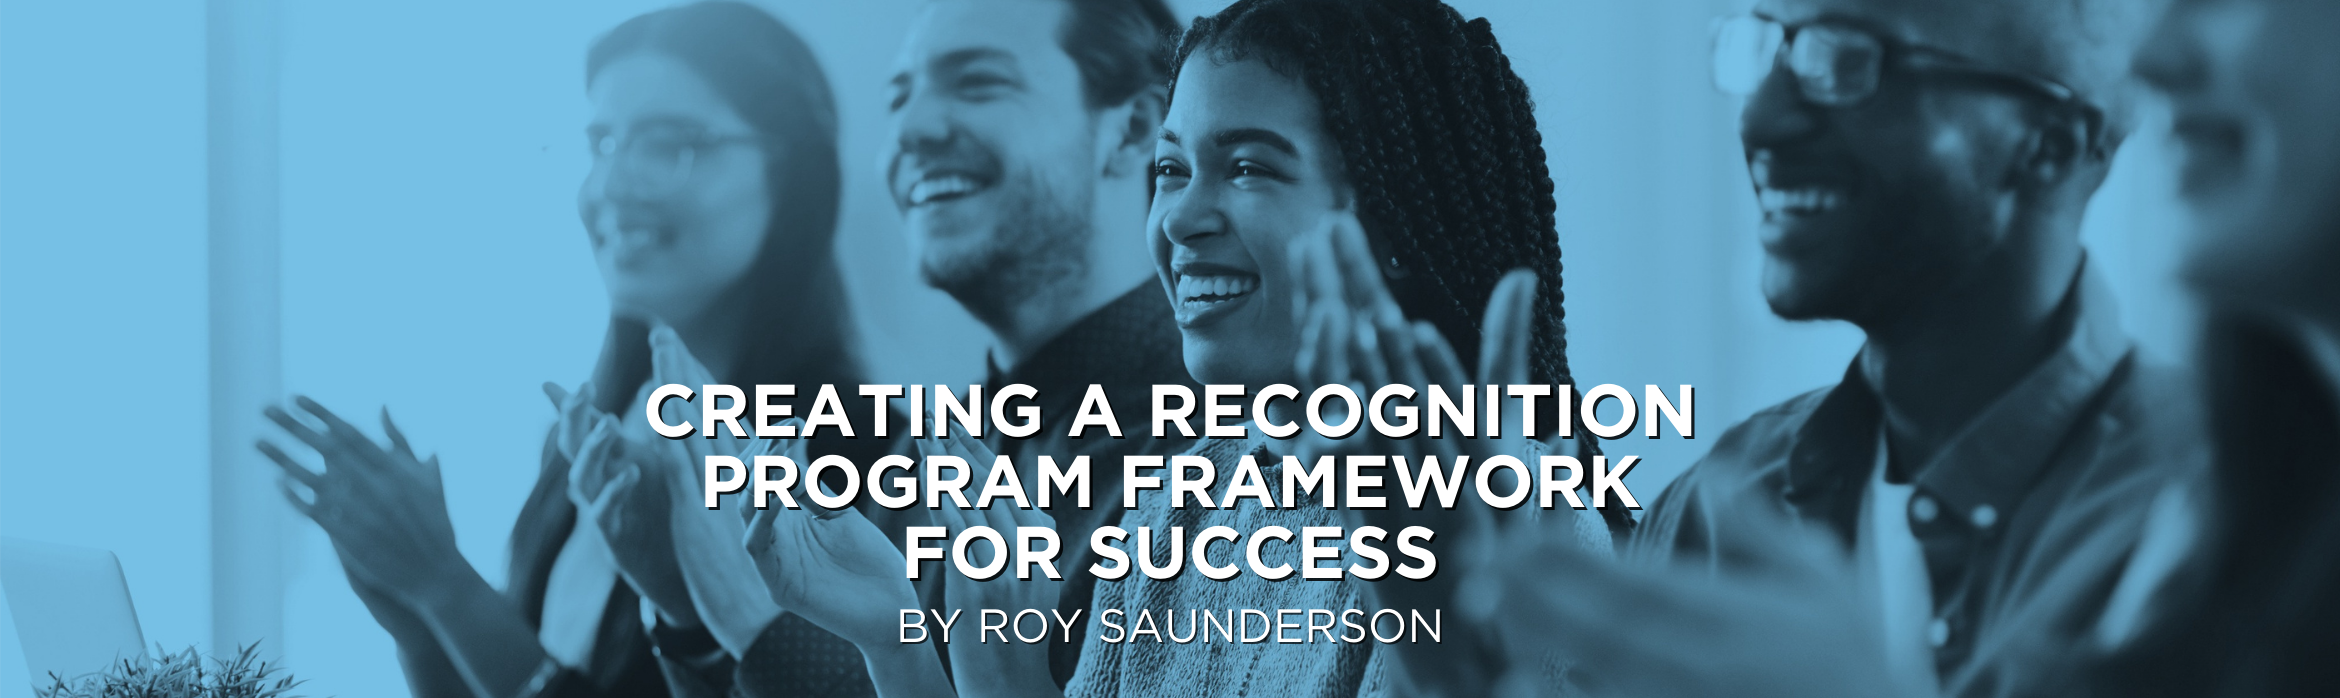 Creating a Recognition Program Framework for Success